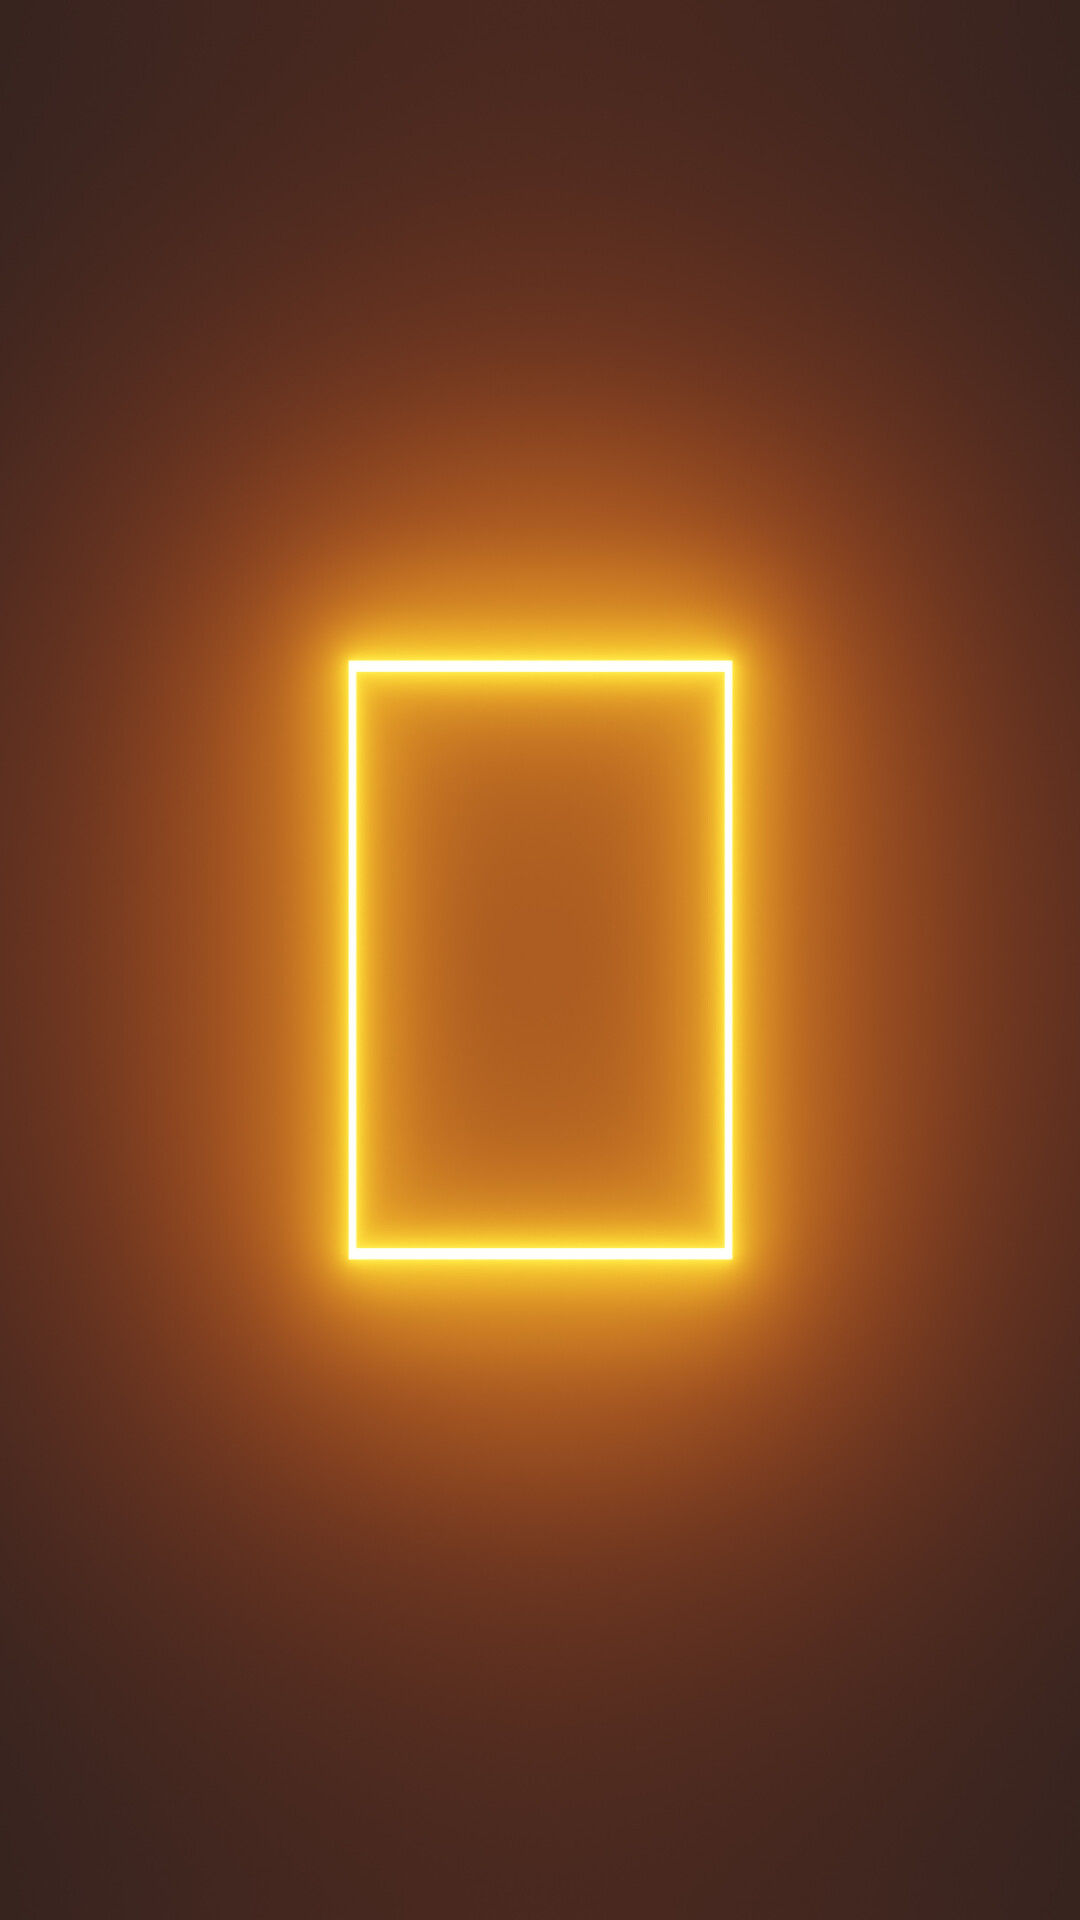 Gold Lights: Glowing rectangular window, Minimalistic, Warm white LED decoration light. 1080x1920 Full HD Wallpaper.